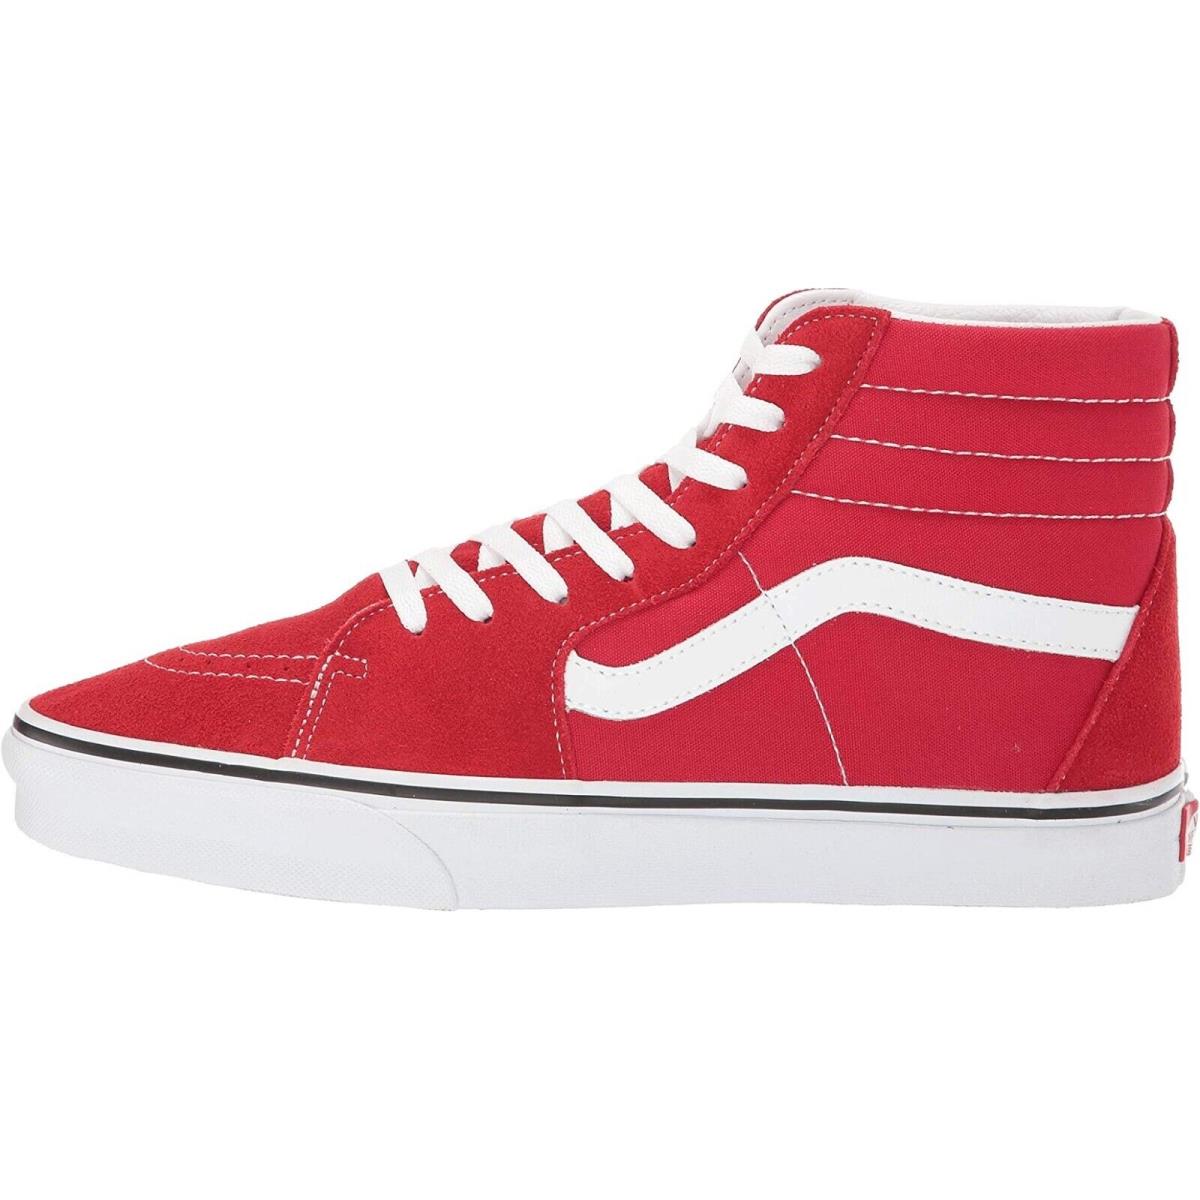 Vans SK8-HI Unisex Canvas Sneakers Mens Womens High Top Skate Shoes Racing Red/True White